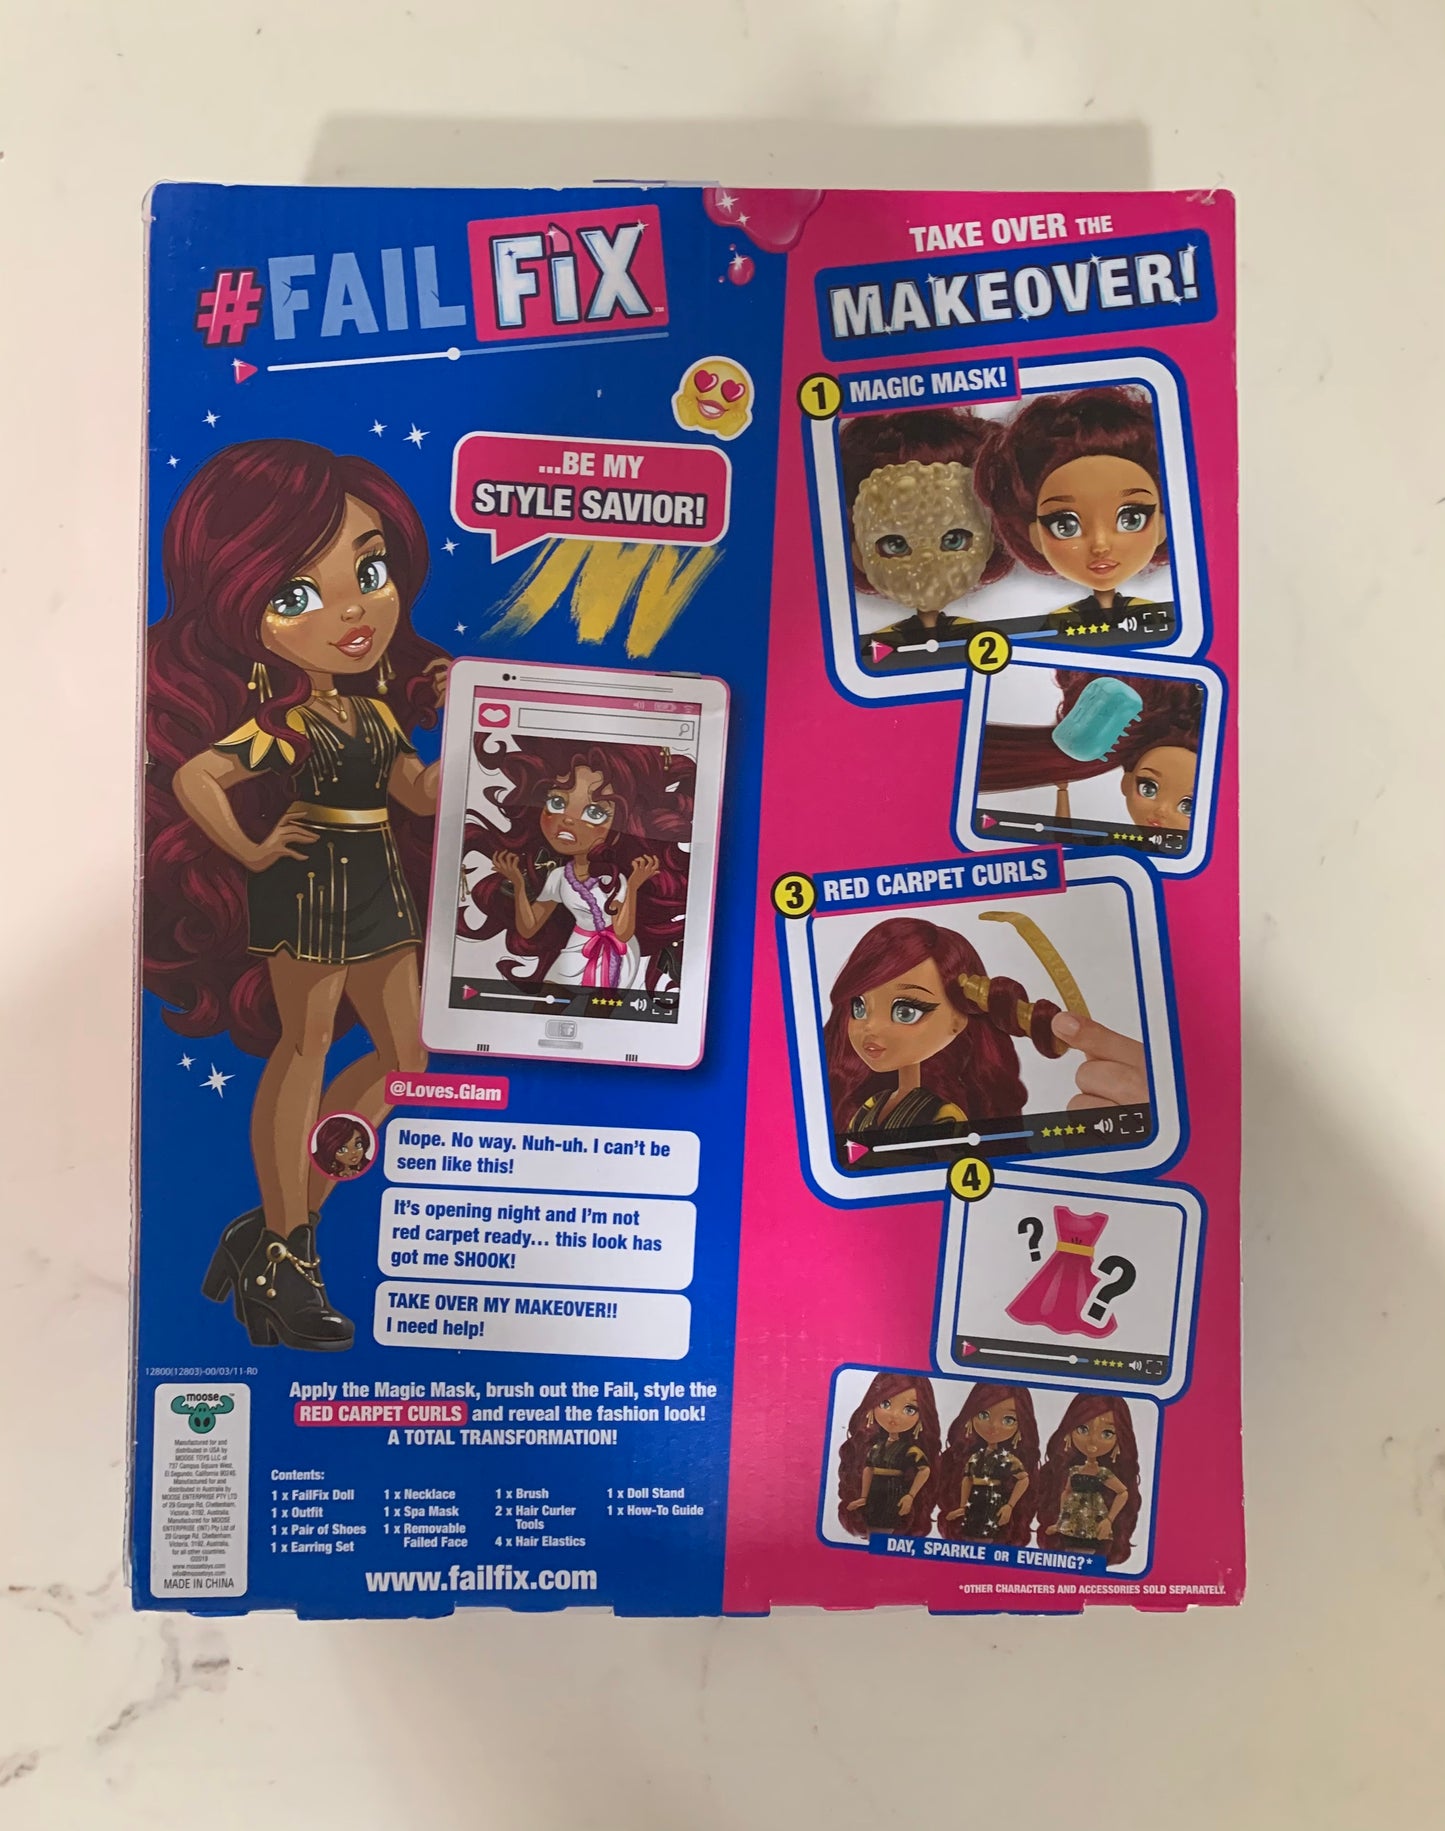 FailFix Loves.Glam Total Makeover Doll 12803